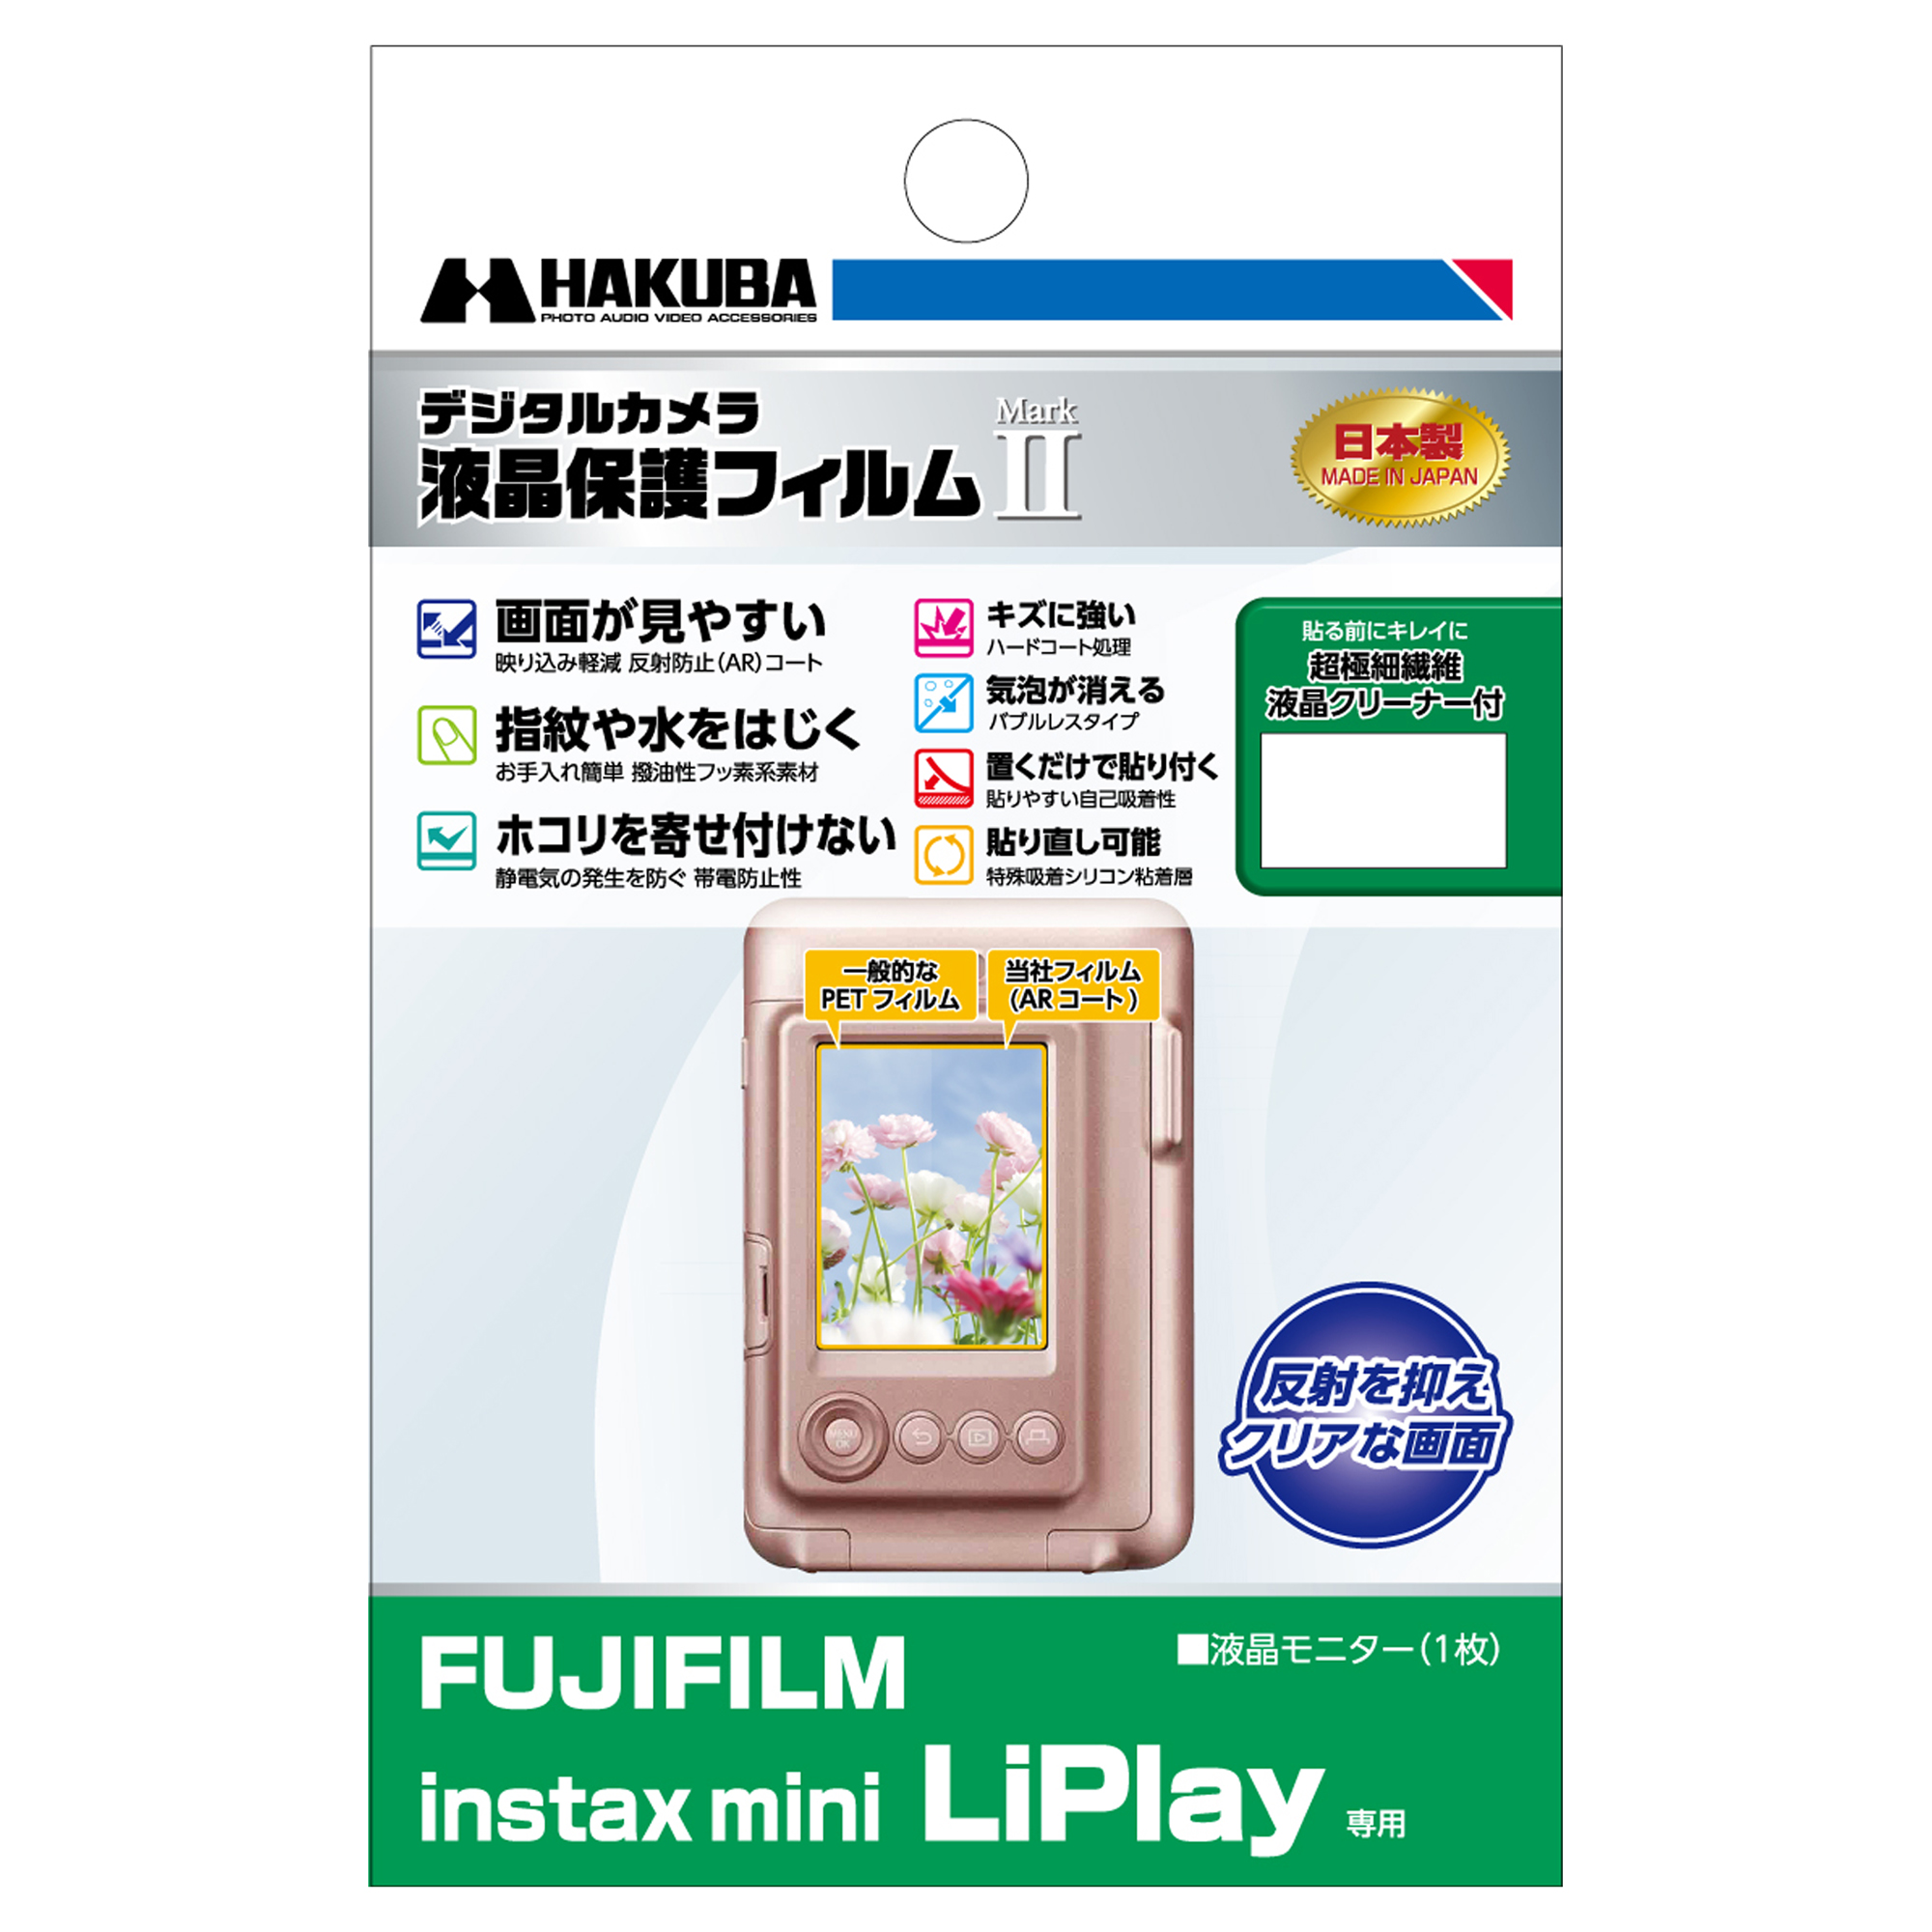 FUJIFILM instax mini LiPlay 専用 液晶保護フィルム 